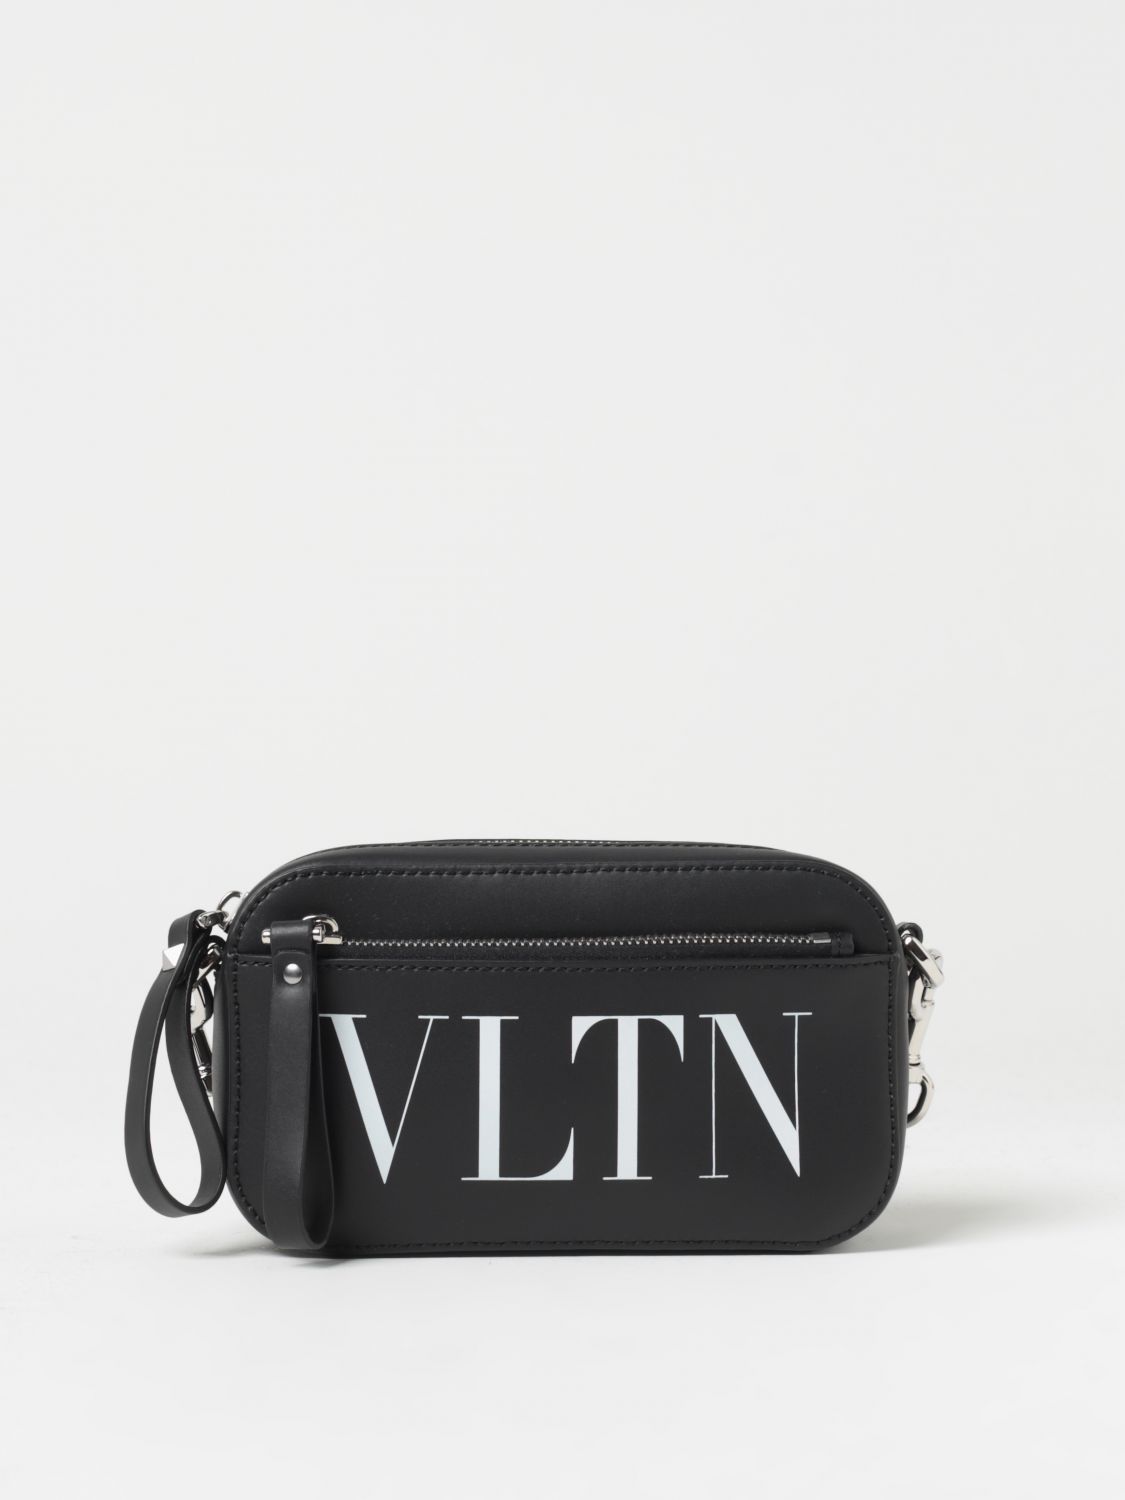 VALENTINO GARAVANI: leather bag with logo - Black  Valentino Garavani  shoulder bag 3Y2B0954WJW online at